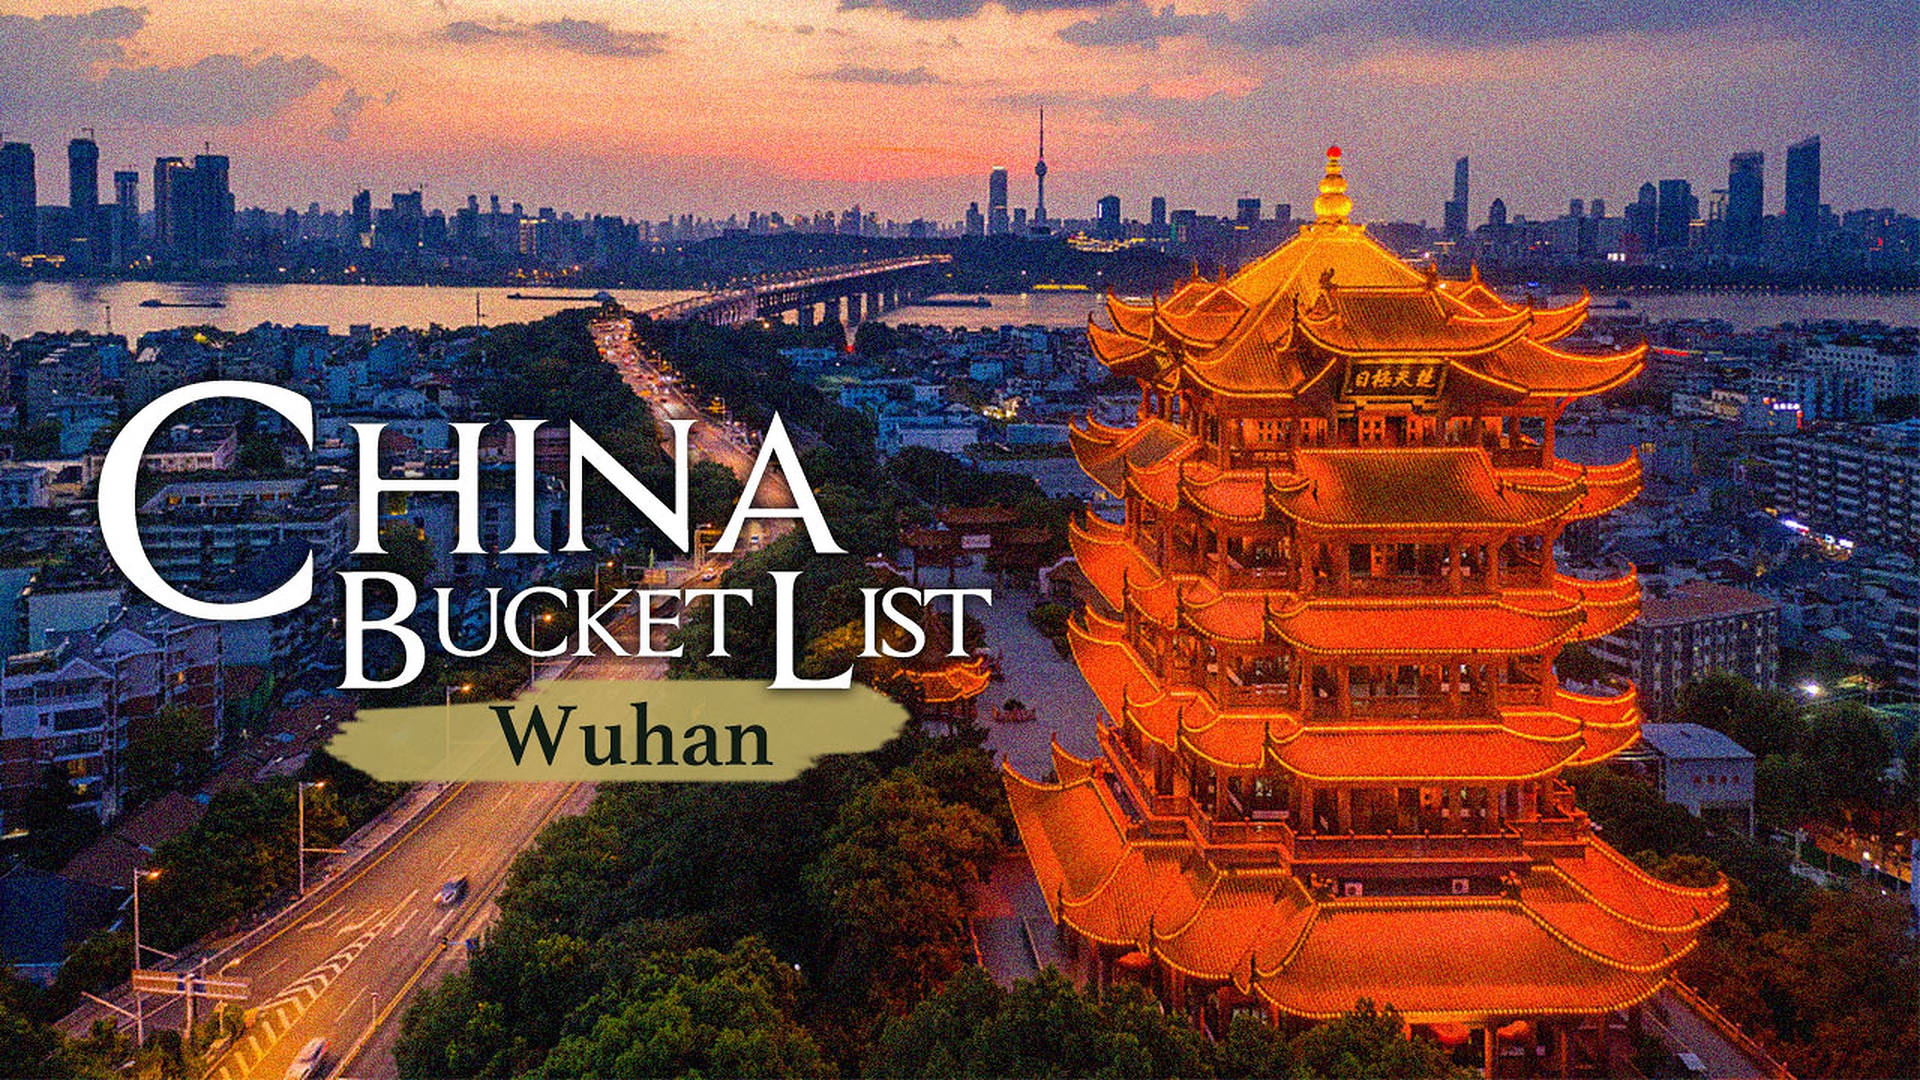 China Bucket List Wuhan Background